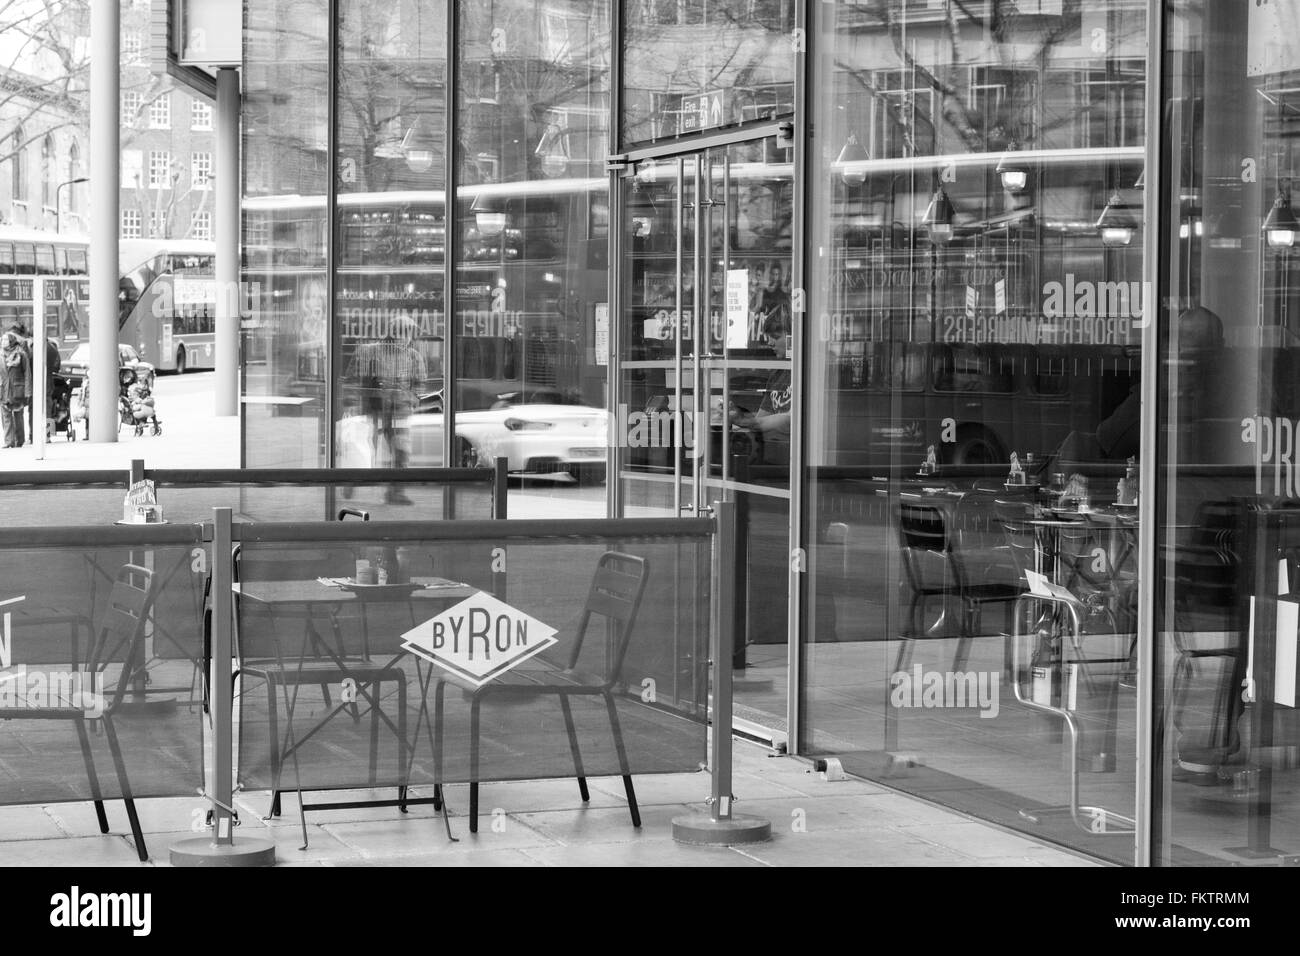 Byron burger restaurant and cafes, St Giles, Holborn, London, UK. ( Black and White) Stock Photo